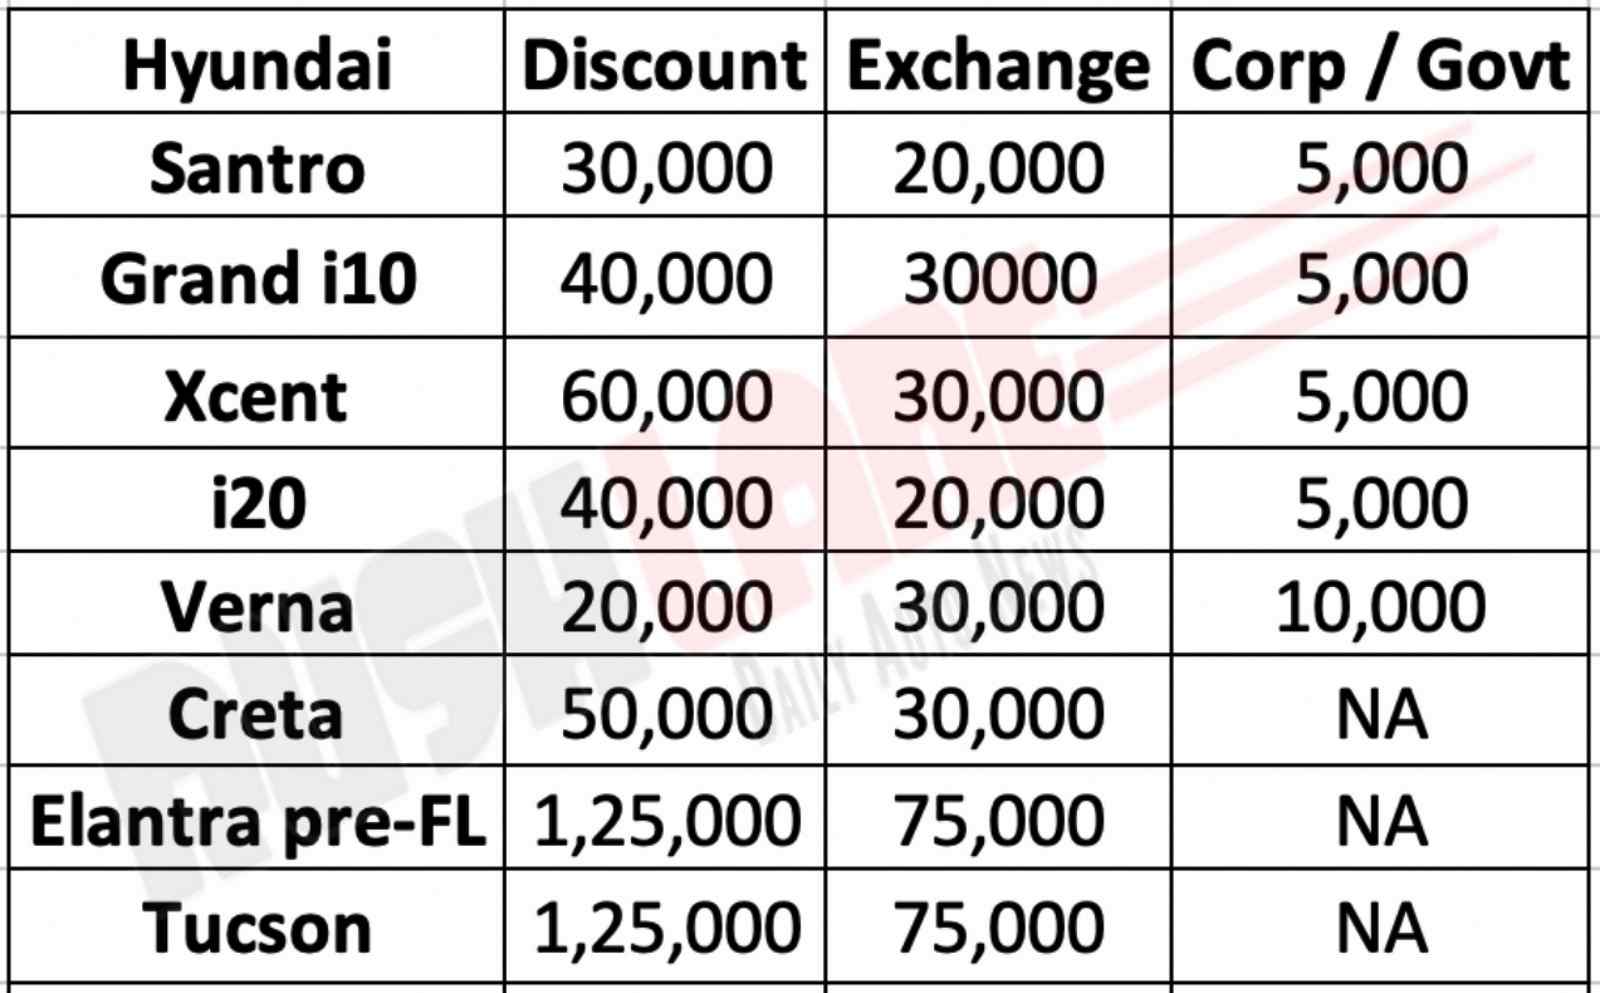 Hyundai car discounts Nov 2019